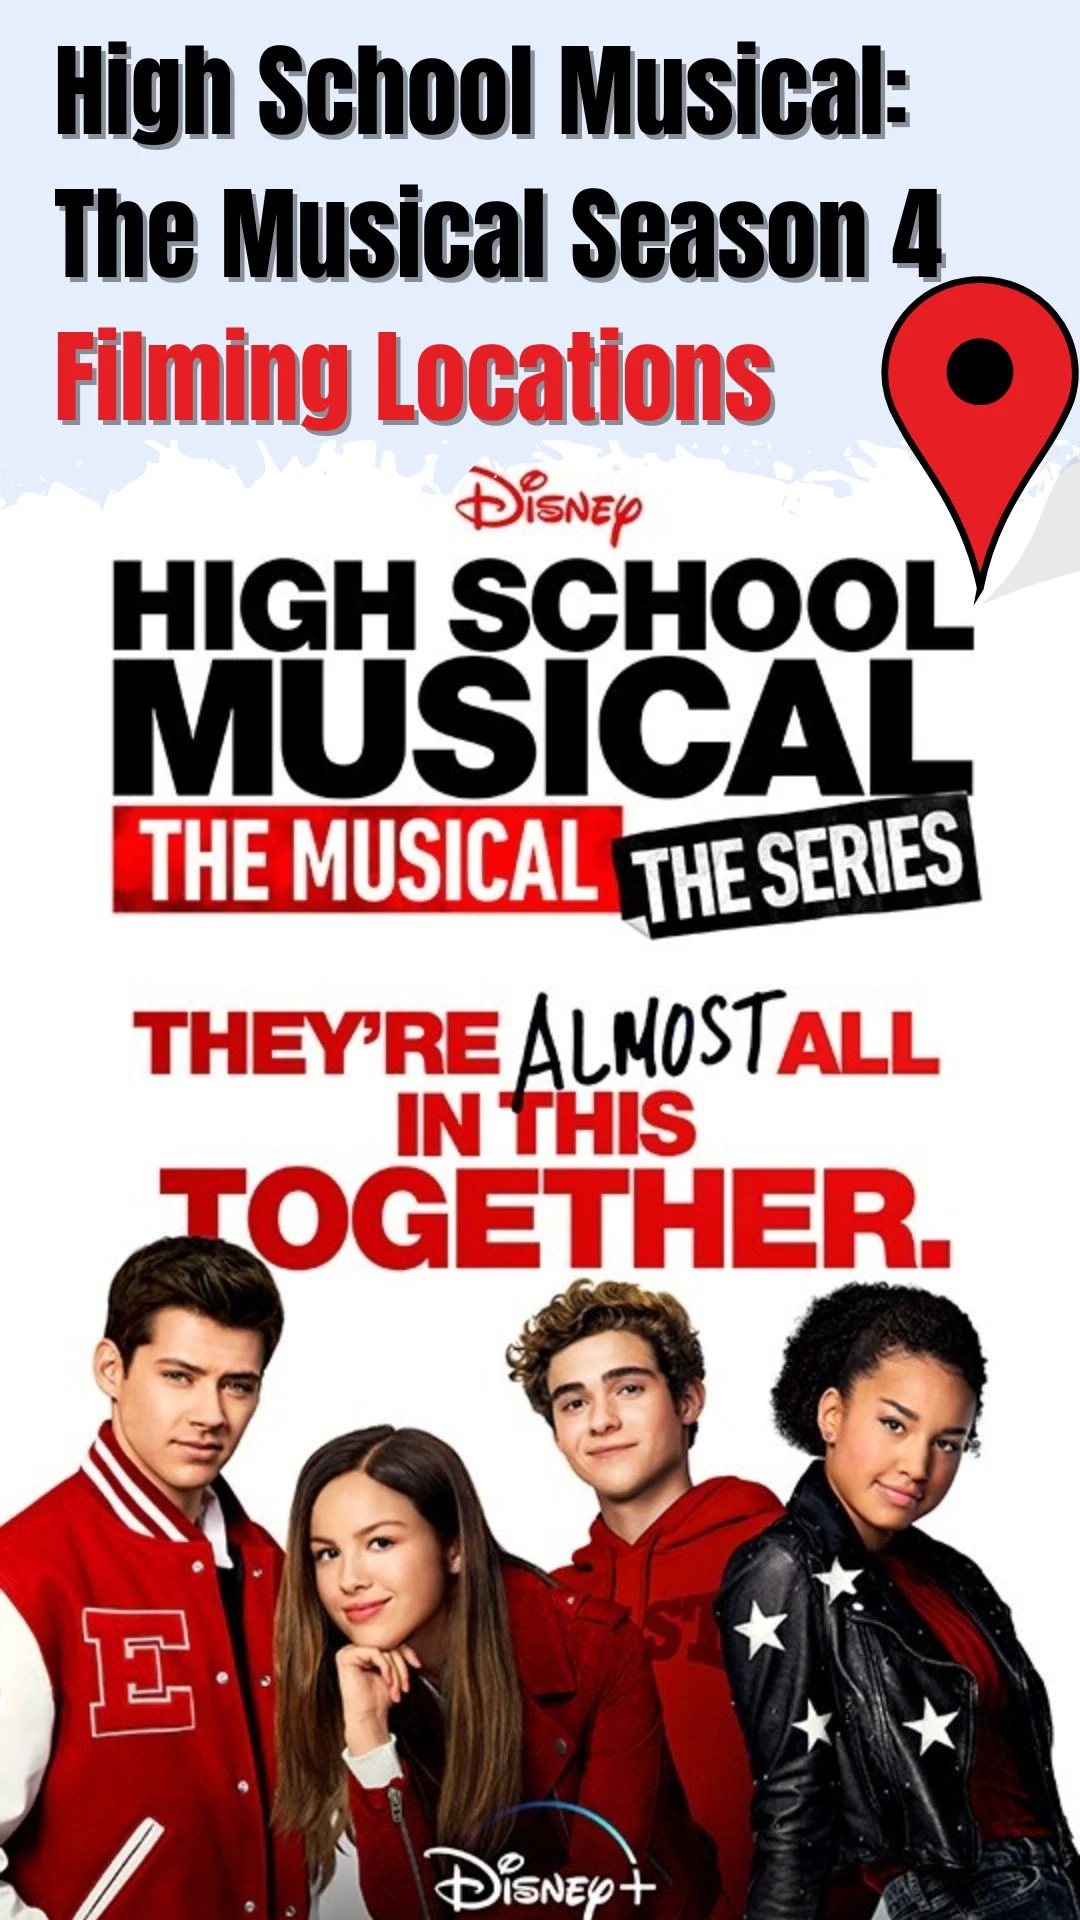 High School Musical The Musical Season 4 Filming Locations